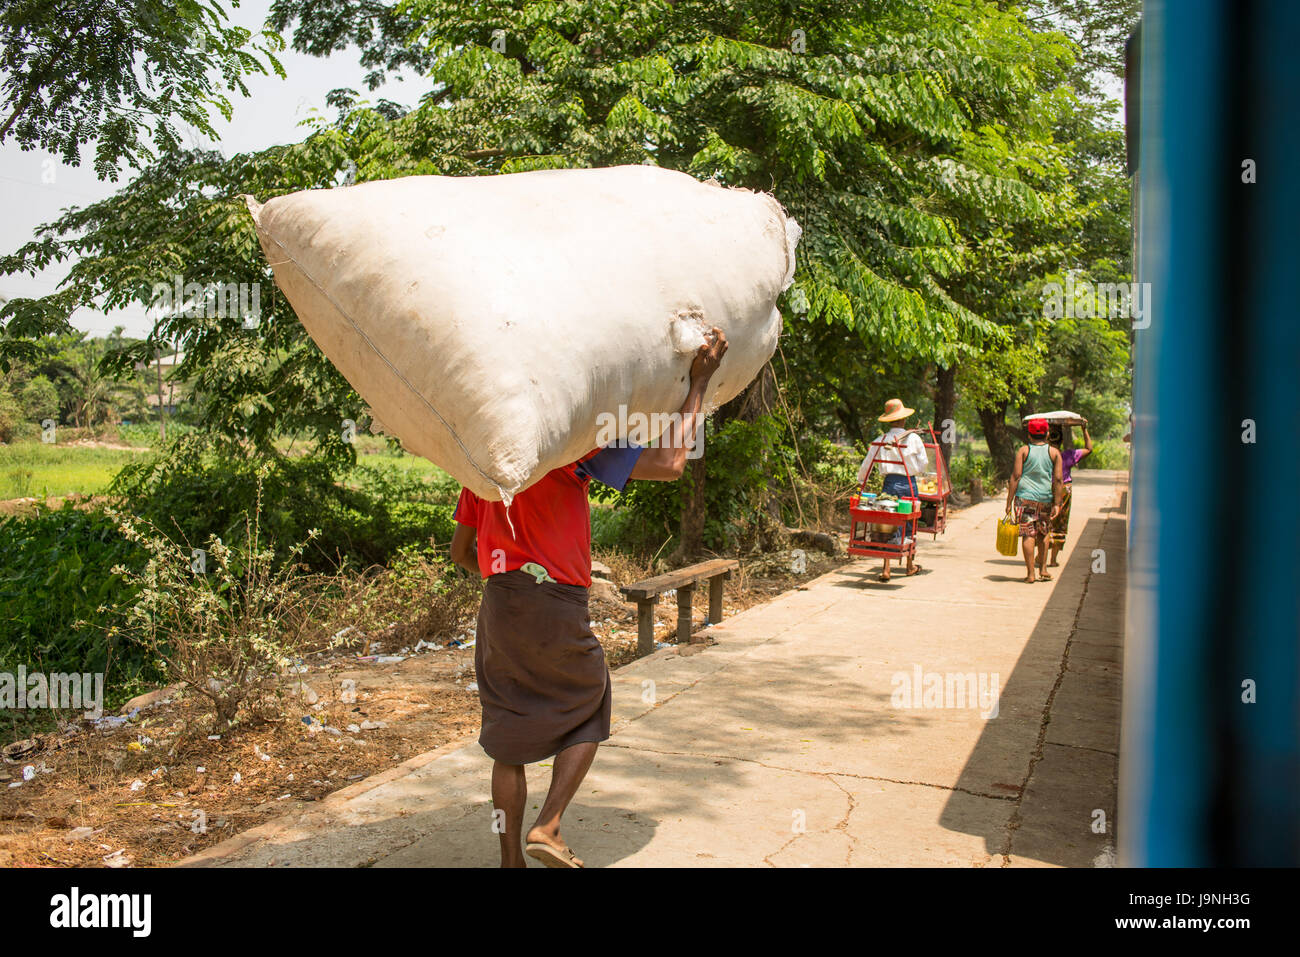 A man carries a large white sack on the platform on the Yangon Circular Railway. Yangon, Myanmar. Stock Photo